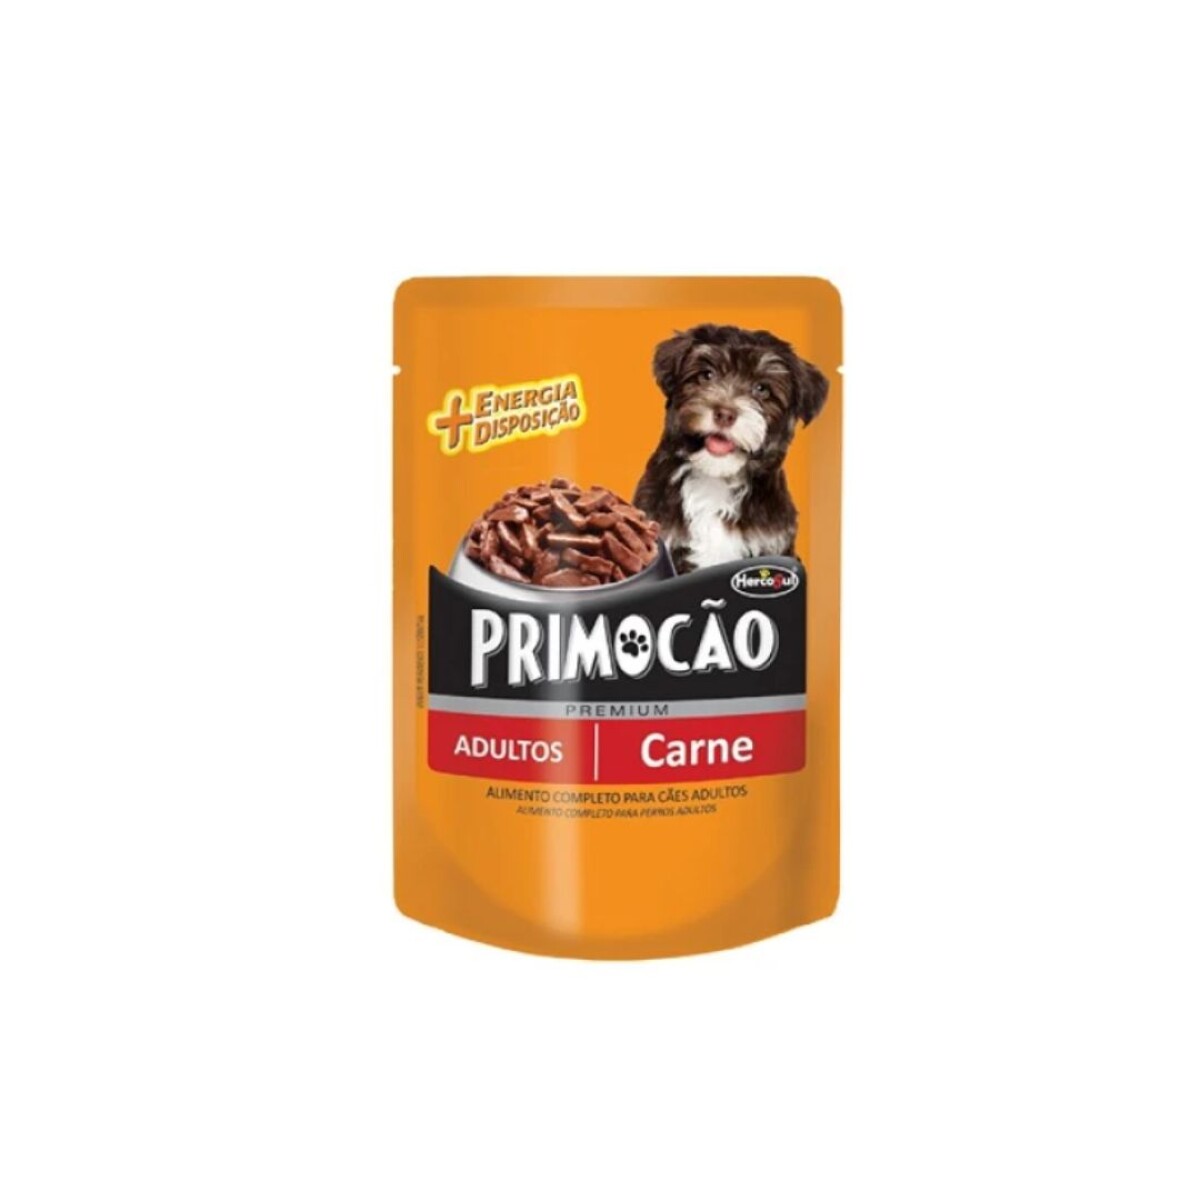 PRIMOCAO SACHE CARNE 100 GR - Unica 